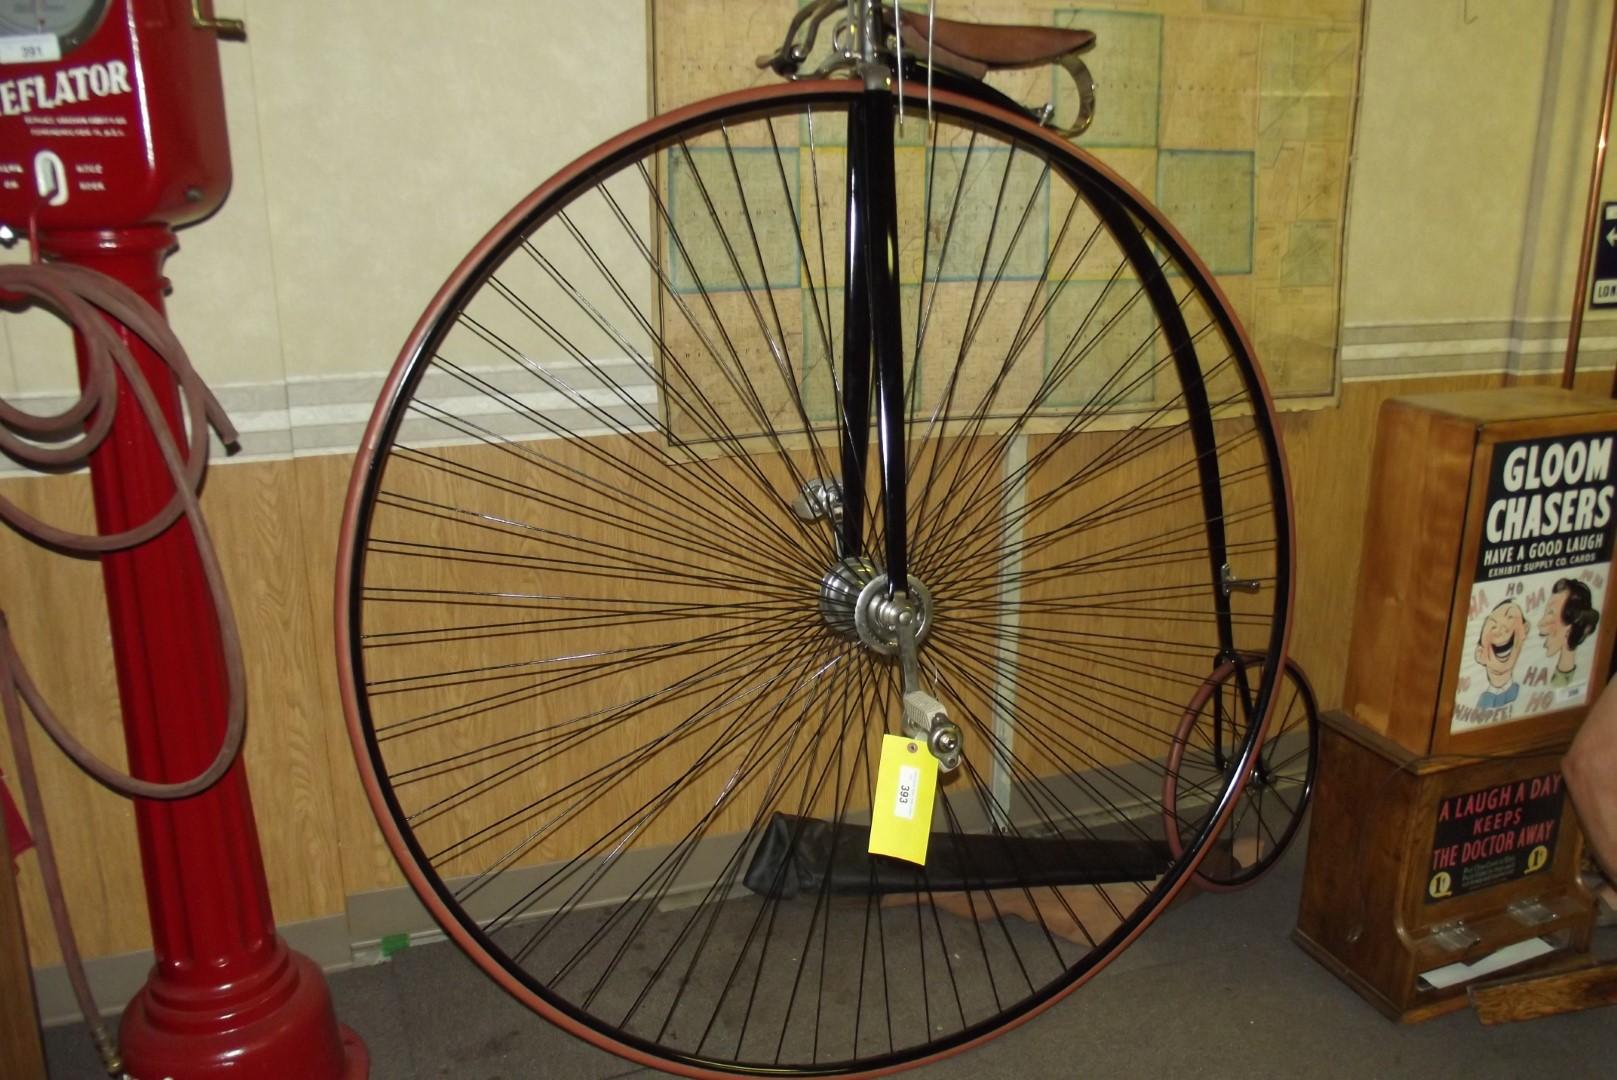 High wheel Bicycle Columbia